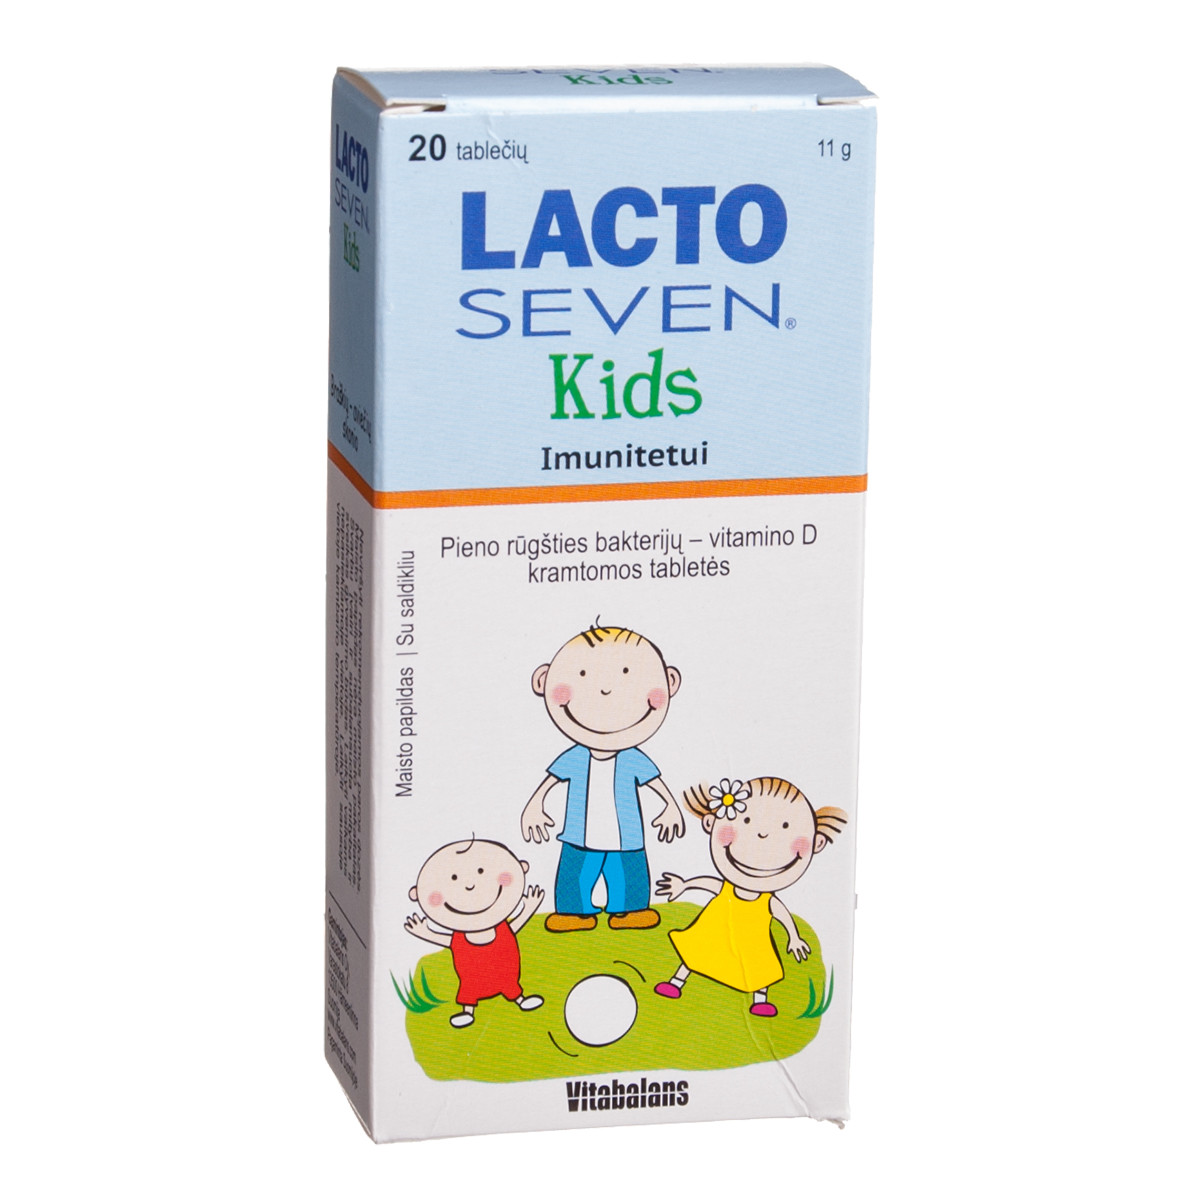 LACTO SEVEN KIDS, 20 tablečių